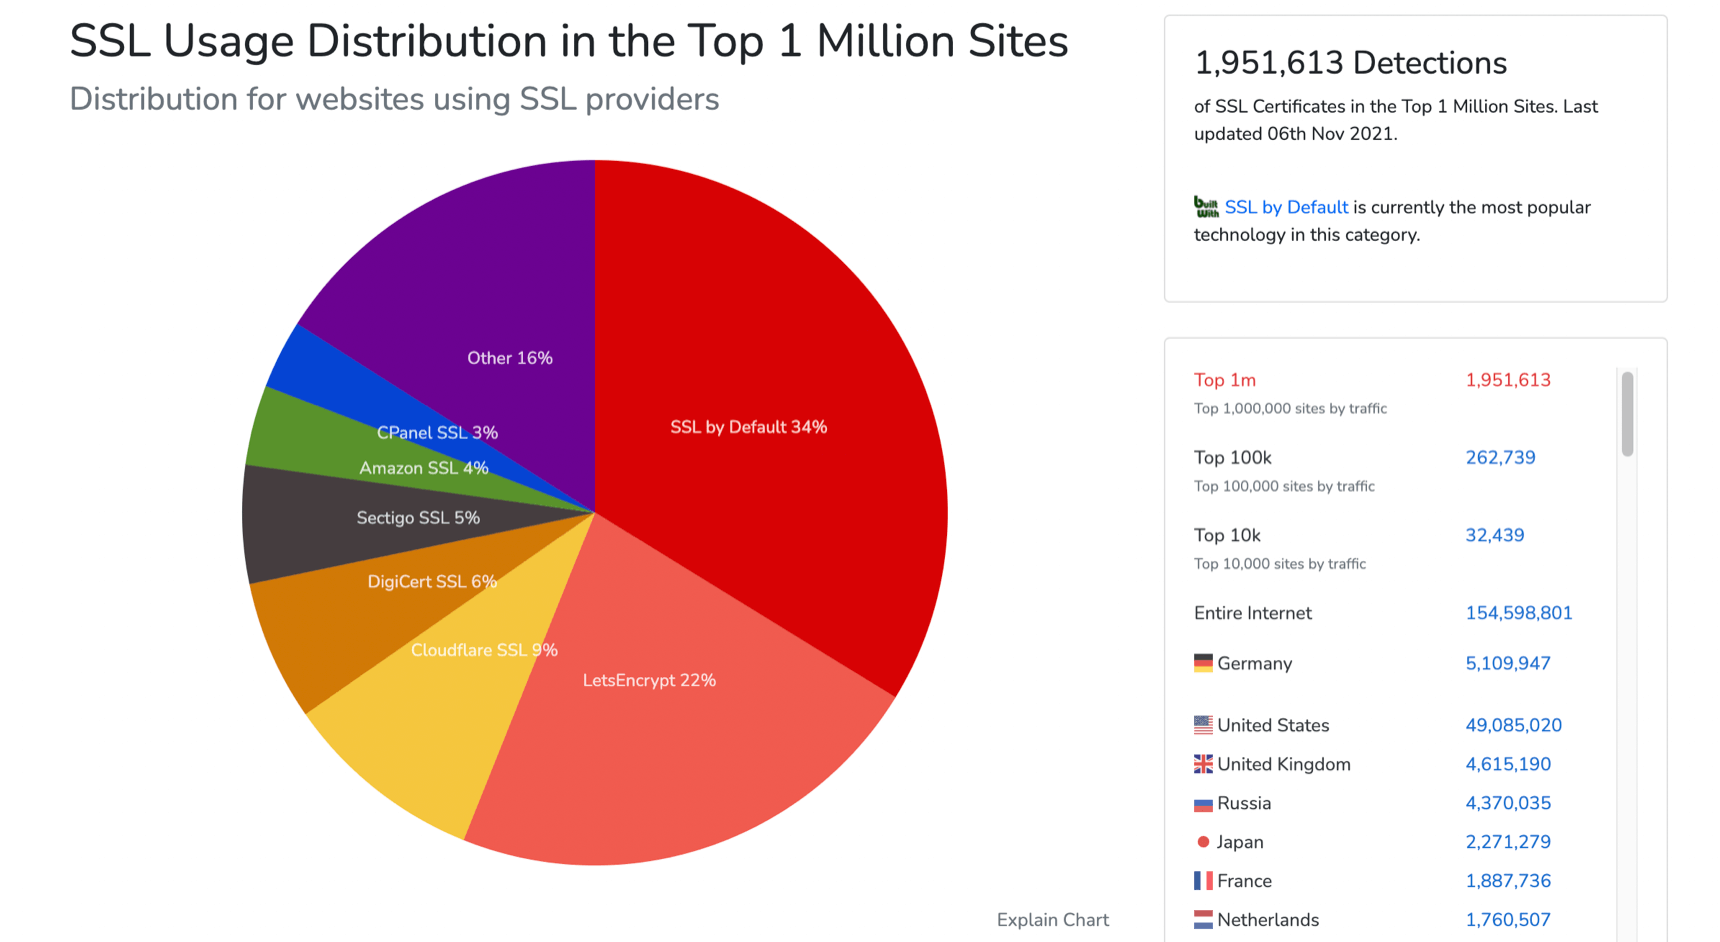 Distribution for websites using SSL providers